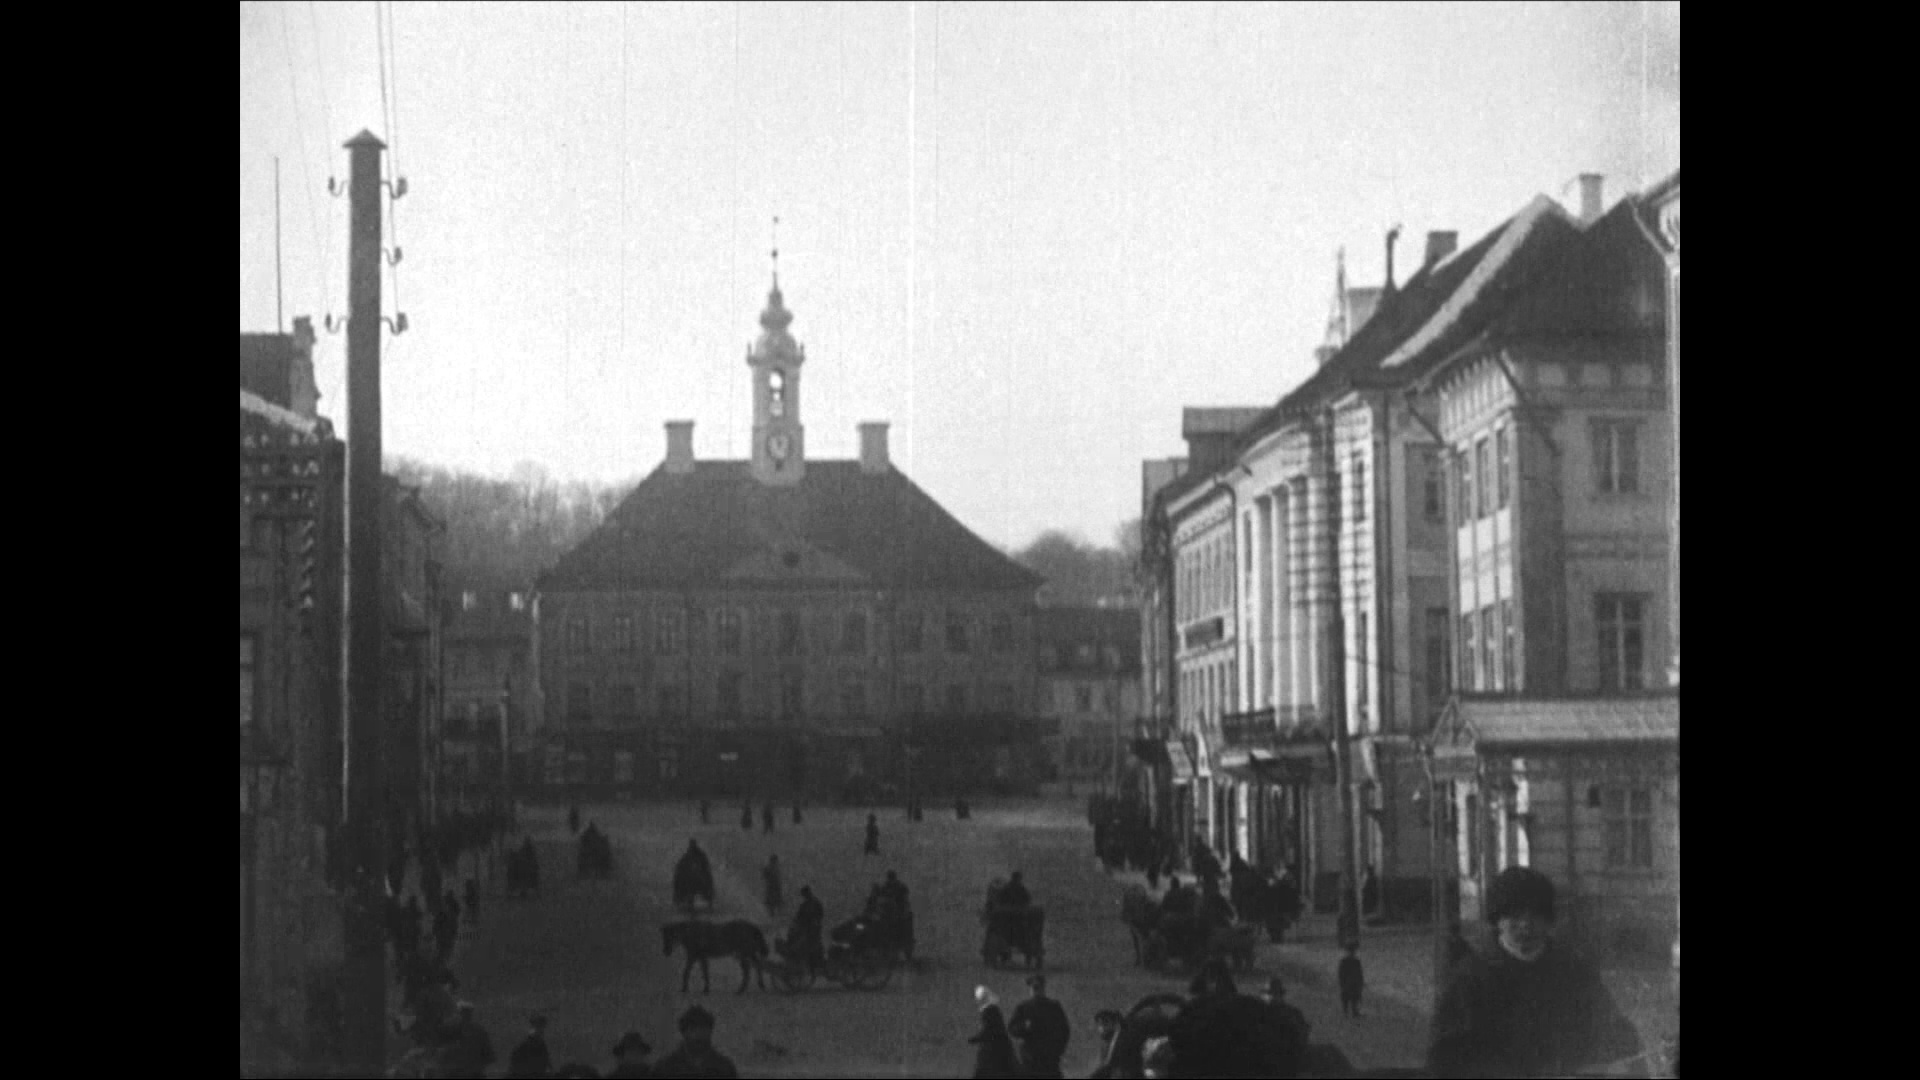 Film "Tartu city and surroundings" 0:01:51.570